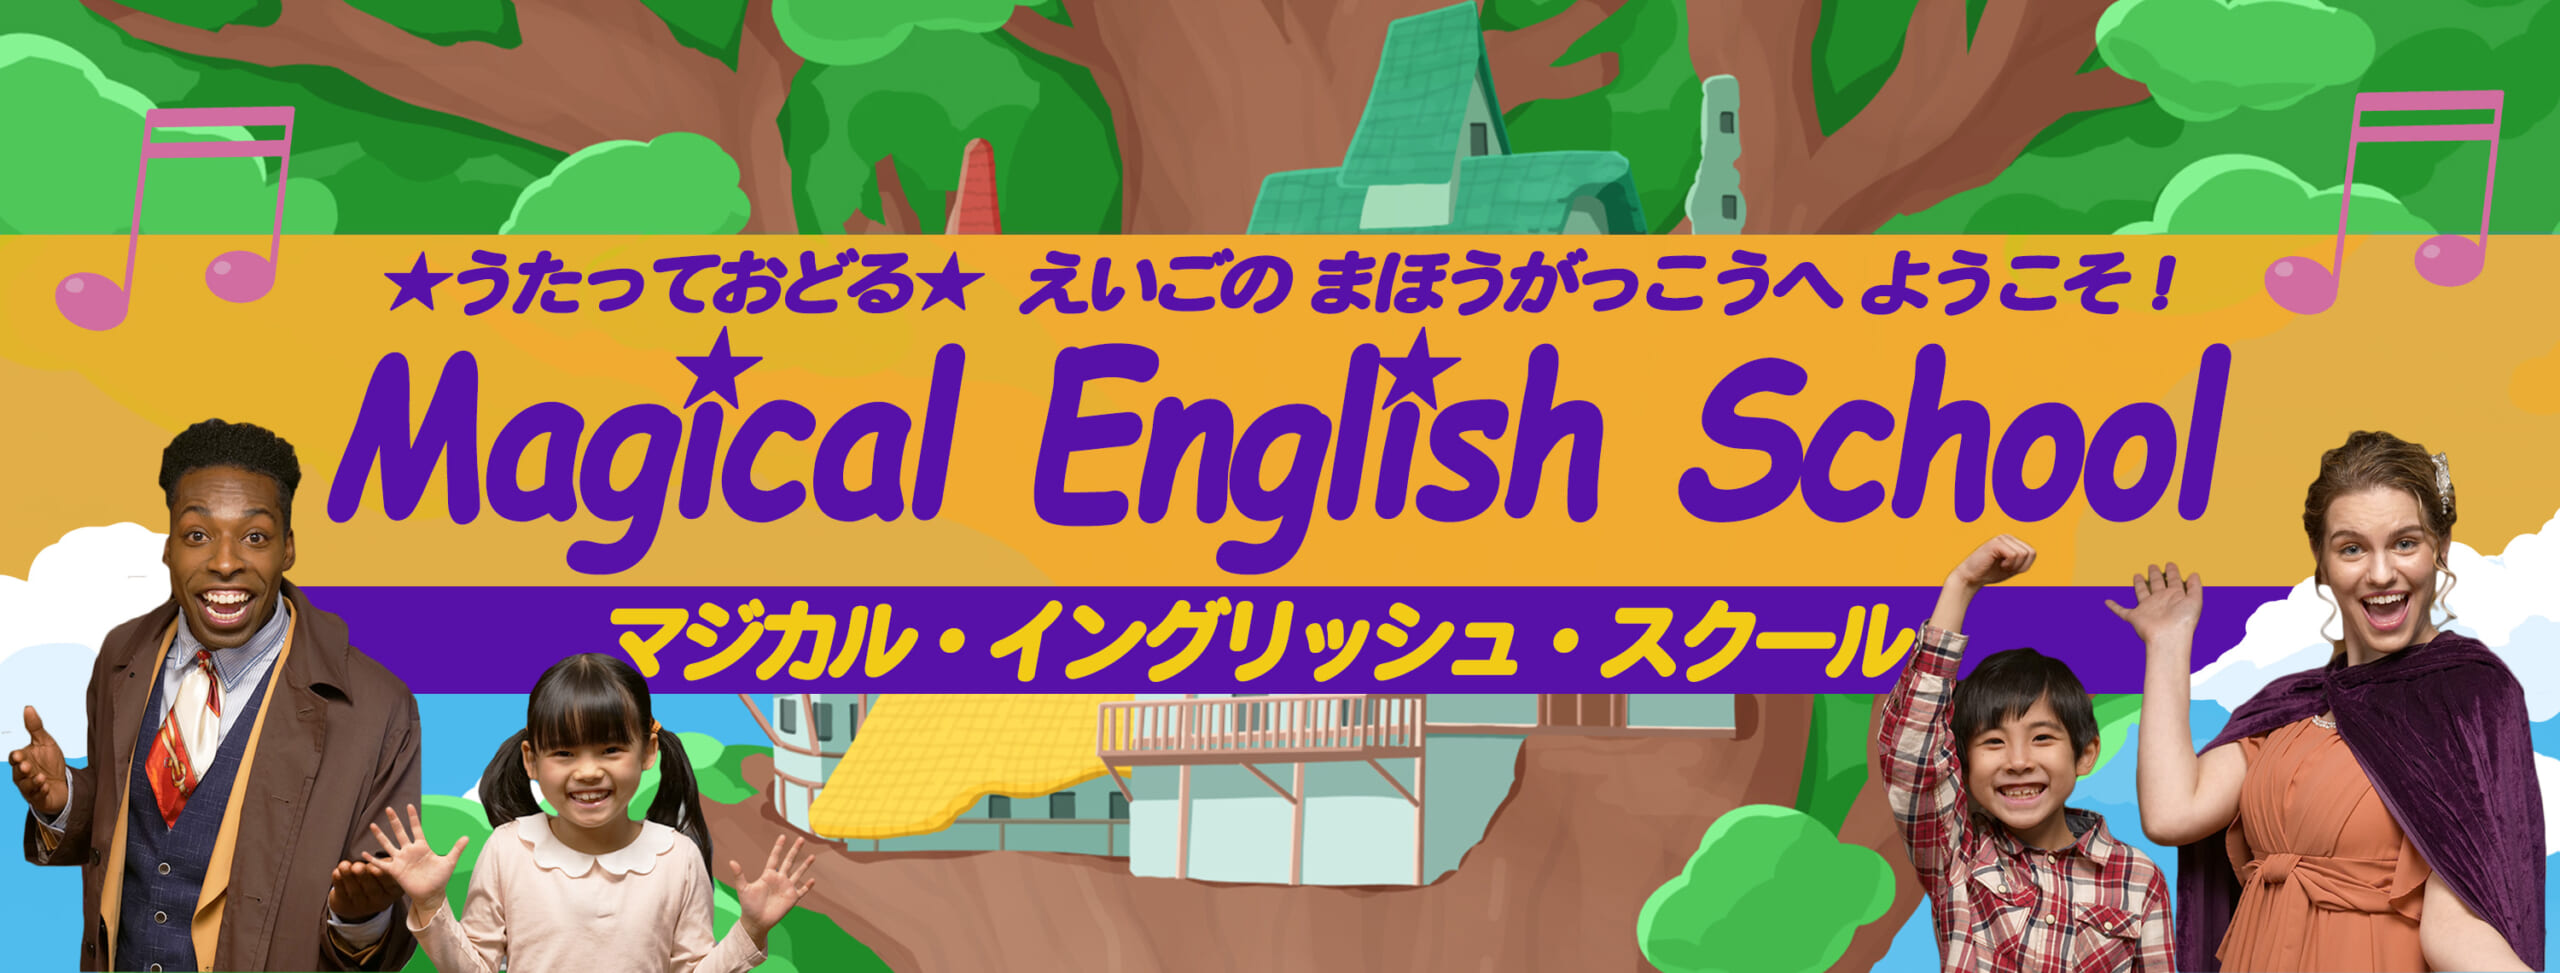 Magical English School マジカル・イングリッシュ・スクール